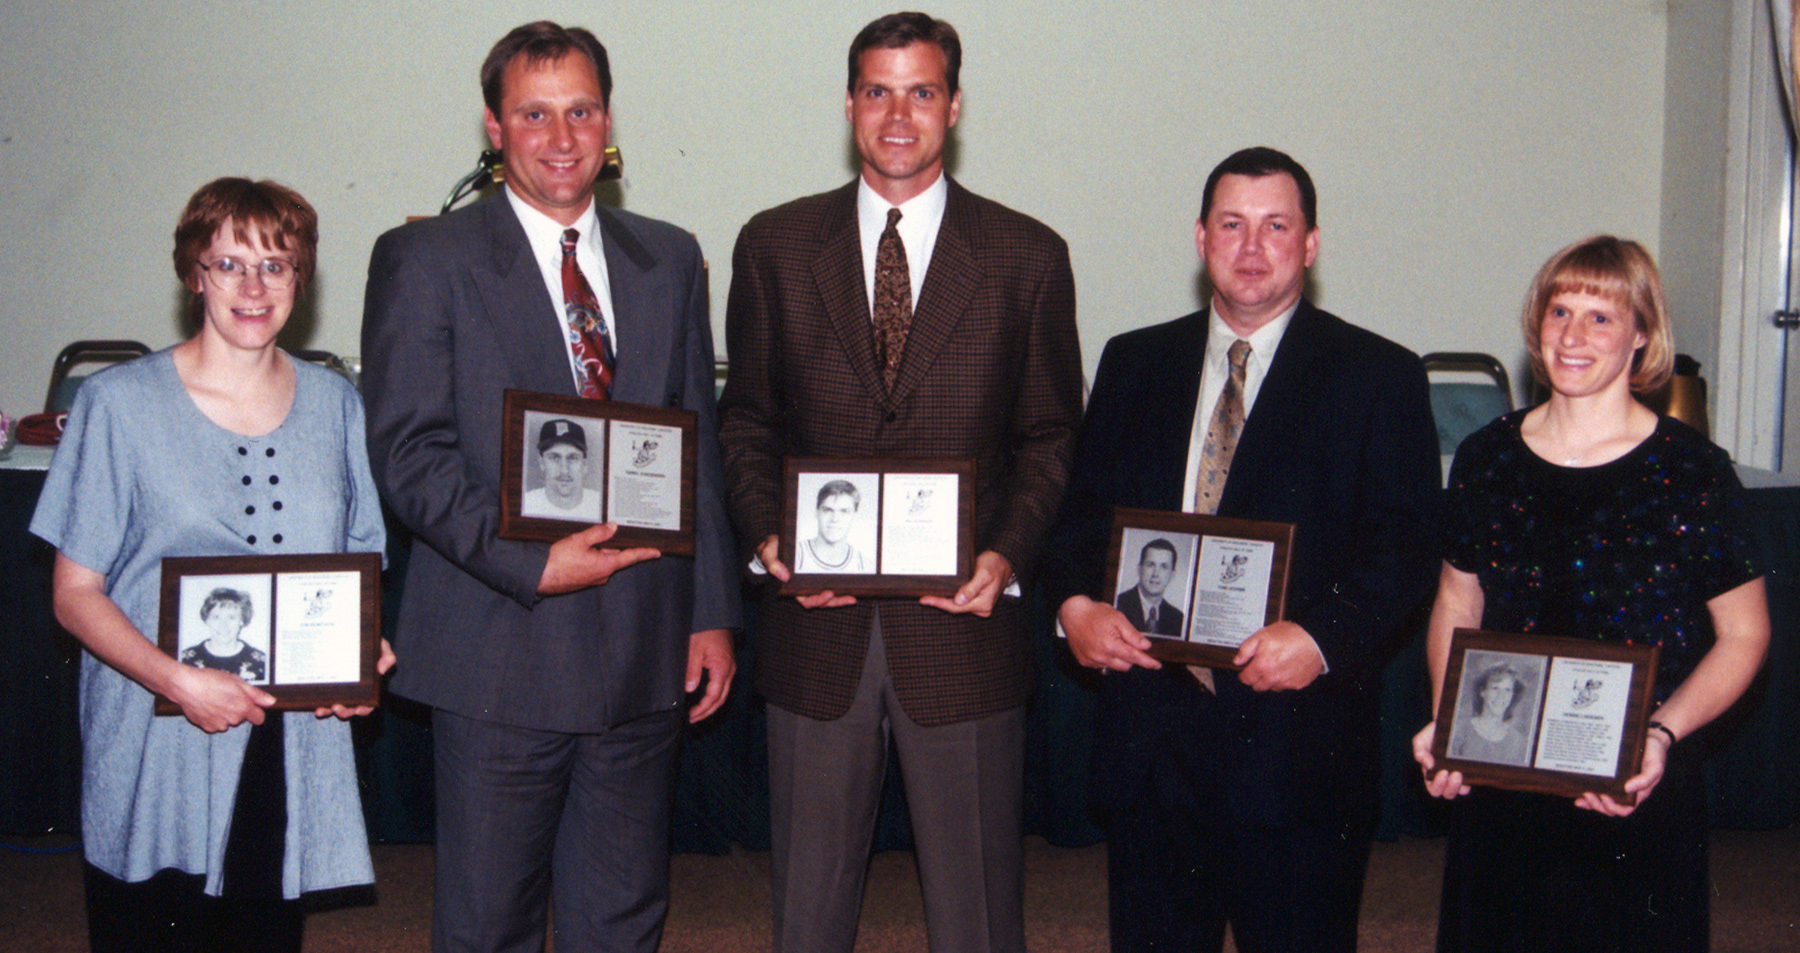 2001 UW-Oshkosh Hall of Fame Inductees (L-R): Kim (Bemowski) Olson, Terry Jorgensen, Ric Kunnert, Tom Lechnir, Debbie (Lindemer) Stenson.